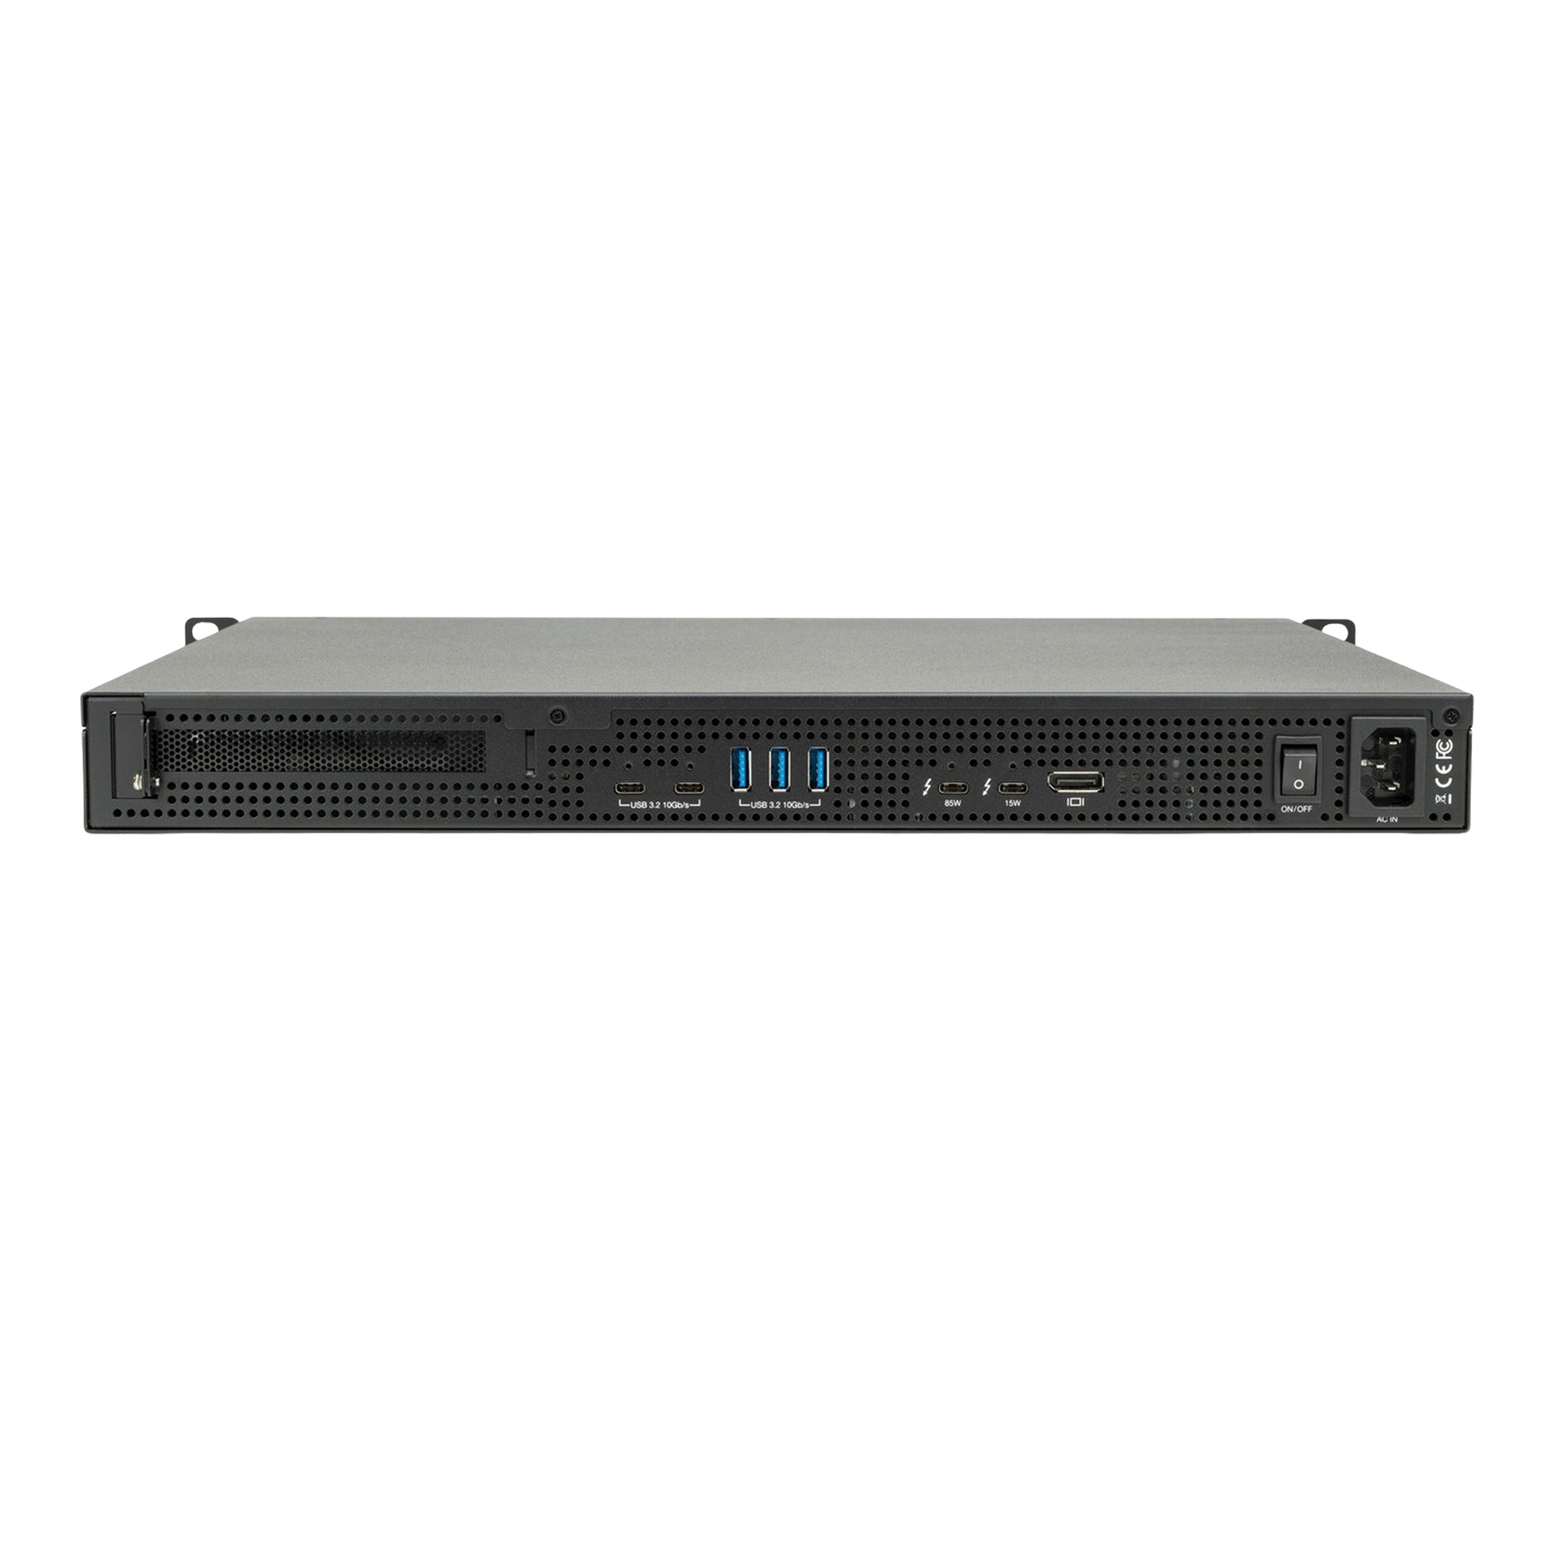 OWC 50TB (4 x 8TB NVMe + 3 x 6TB HDD) Flex 1U4 4-Bay Rackmount Thunderbolt Storage, Docking & PCIe Expansion Solution